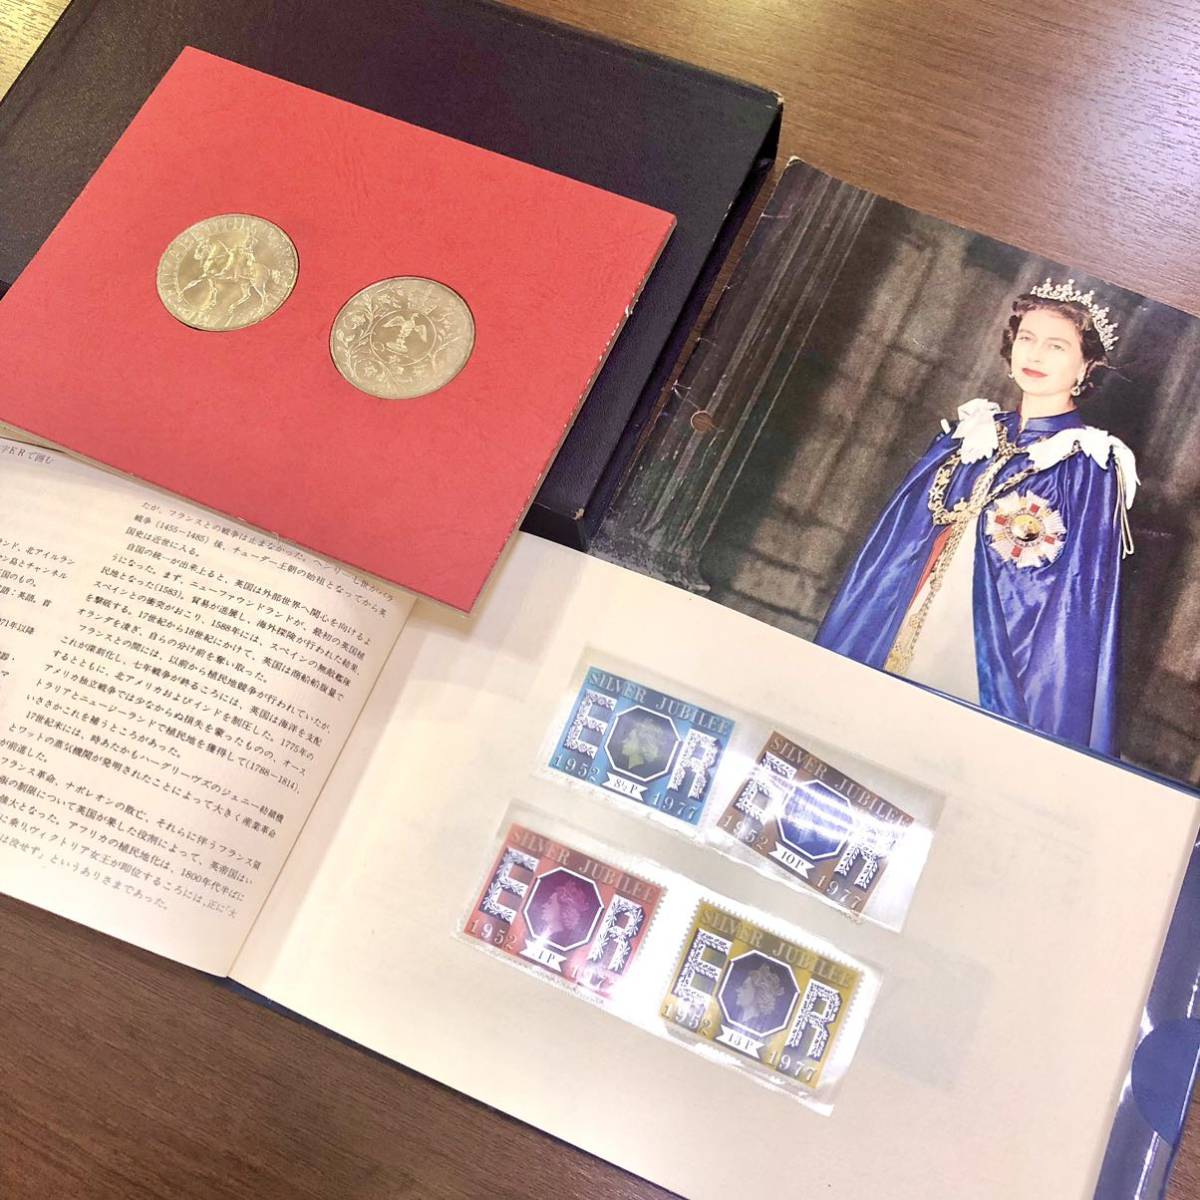 エリザベス二世女王陛下 在位25周年記念 記念貨幣・記念切手帳